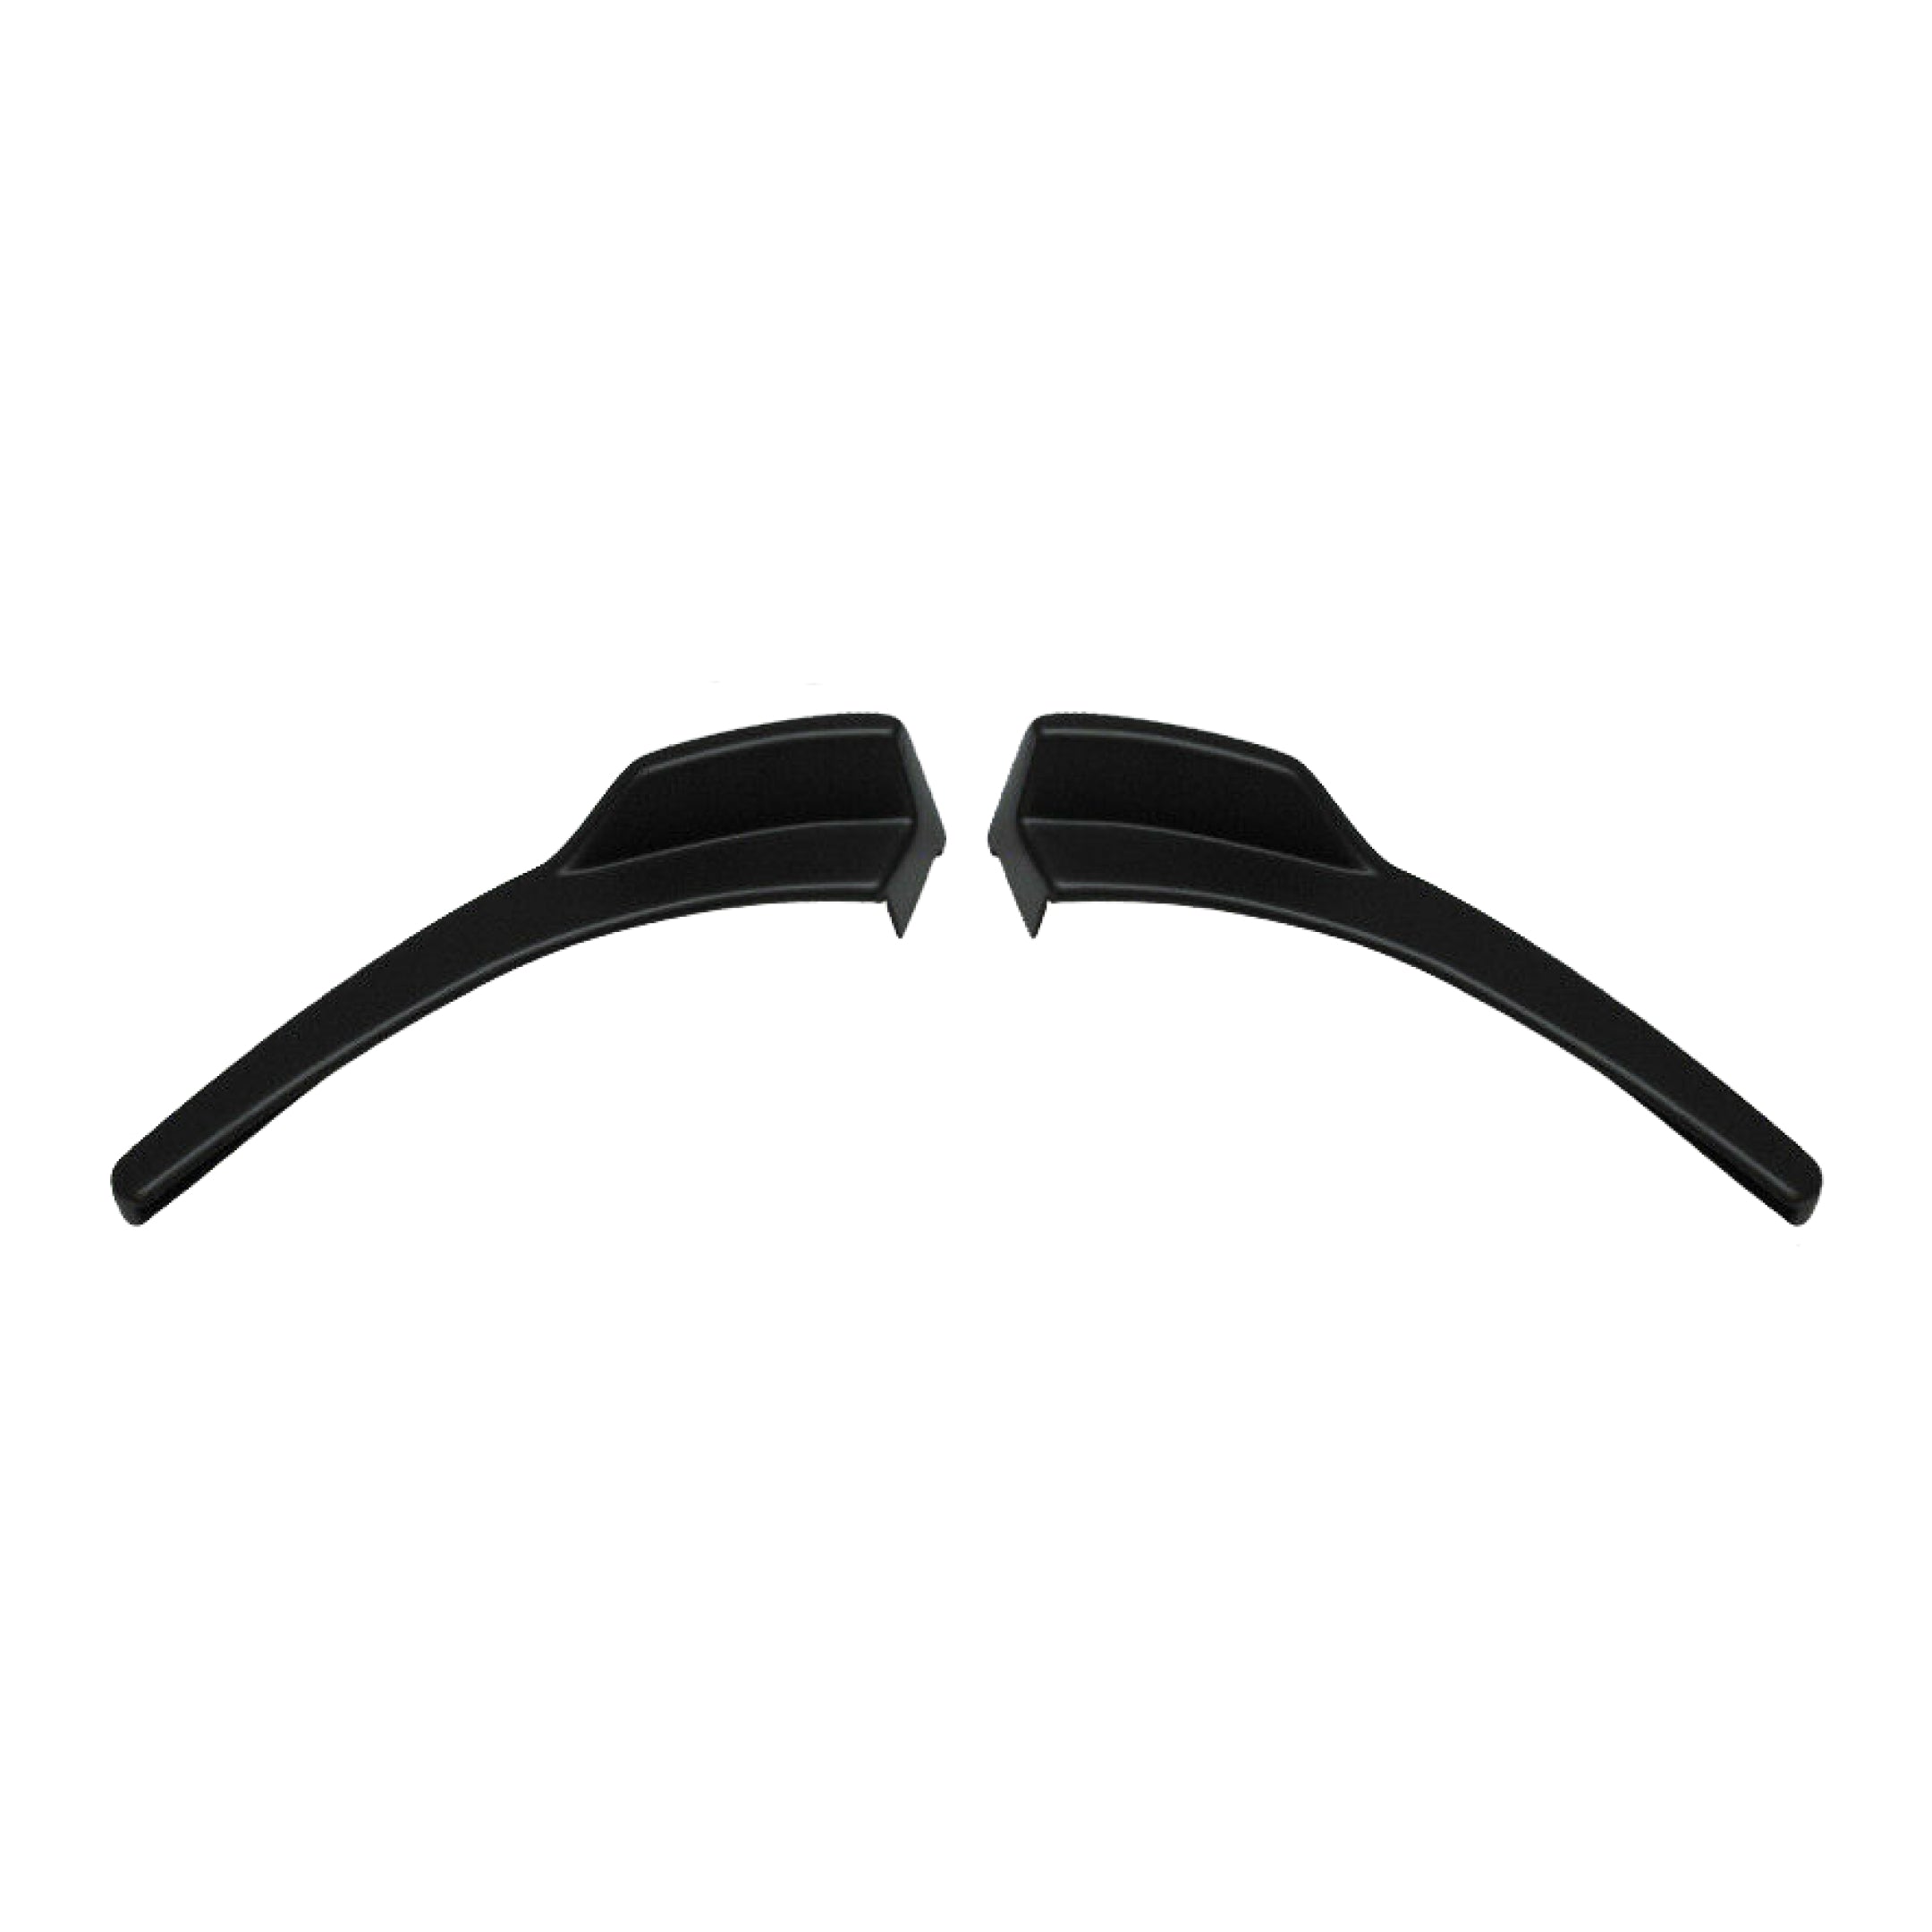 Fit 2012-2017 Hyundai Veloster OE estilo parachoques trasero esquina Chins Splitters Body Kit (sin pintar negro mate)